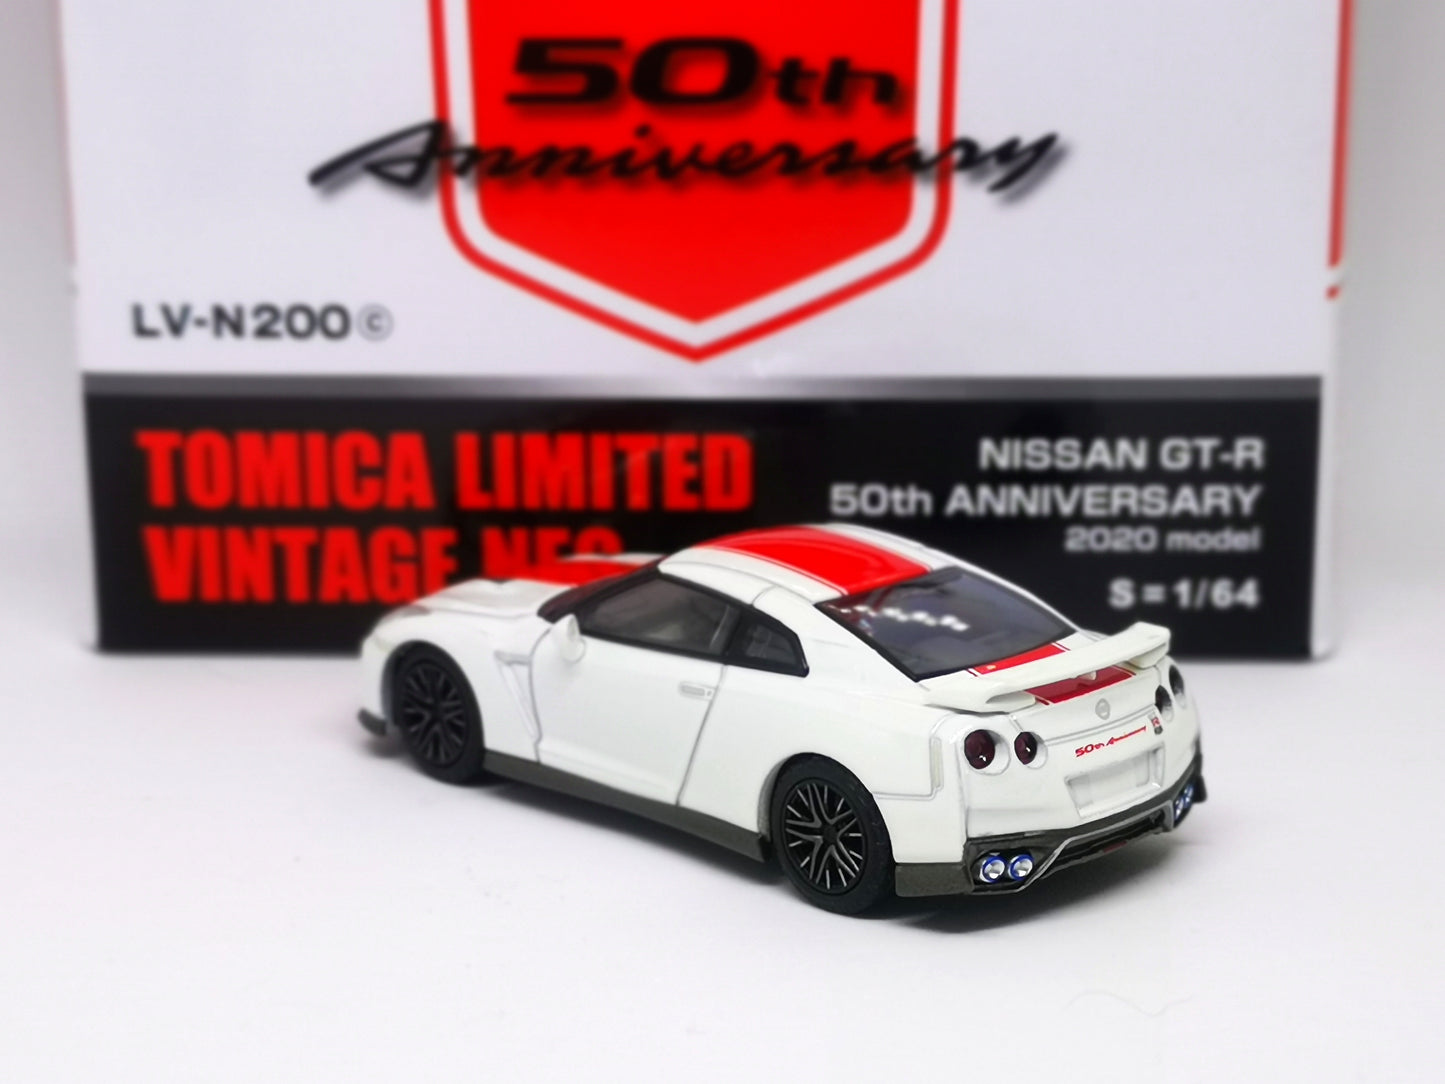 LV-N200c Nissan GT-R 50th ANNIVERSARY